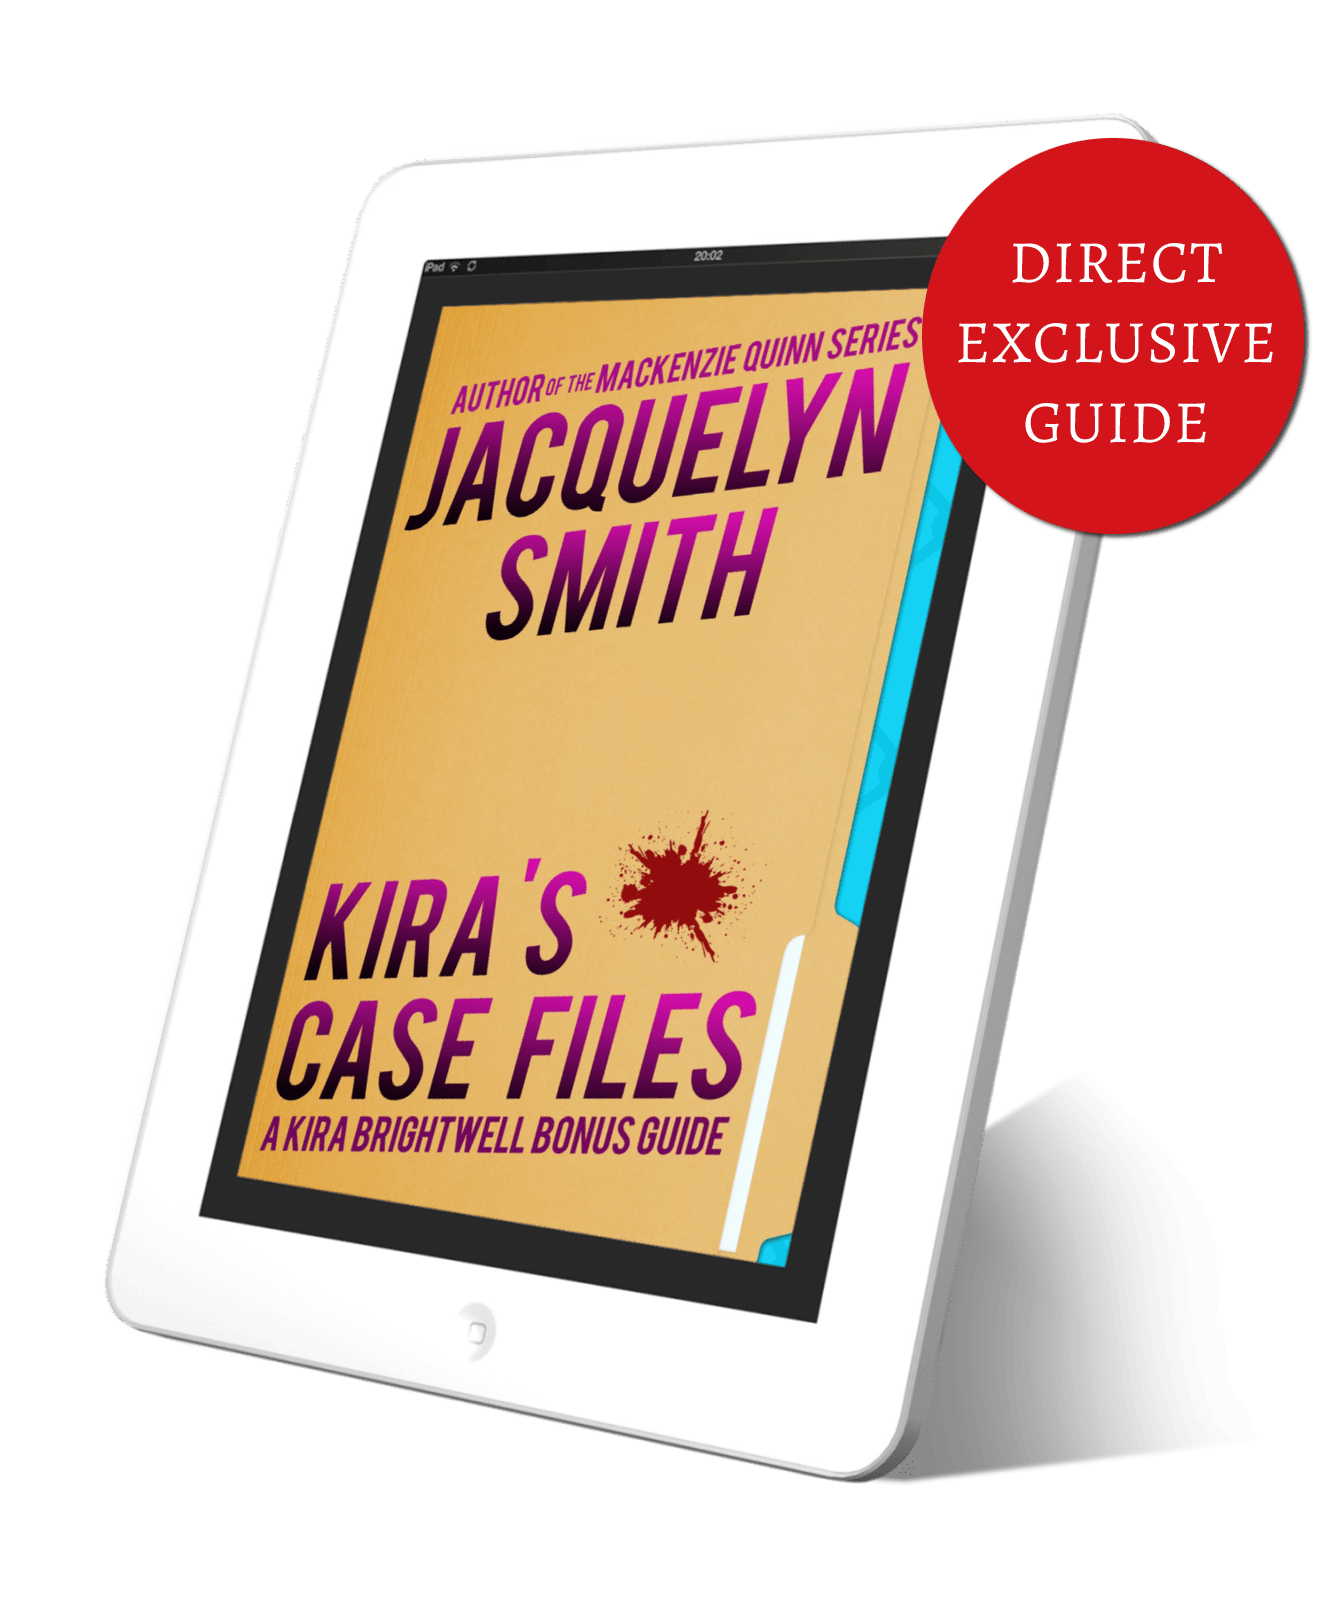 Kira's Case Files: A Kira Brightwell Bonus Guide (Direct Exclusive) - Jacquelyn Smith Books